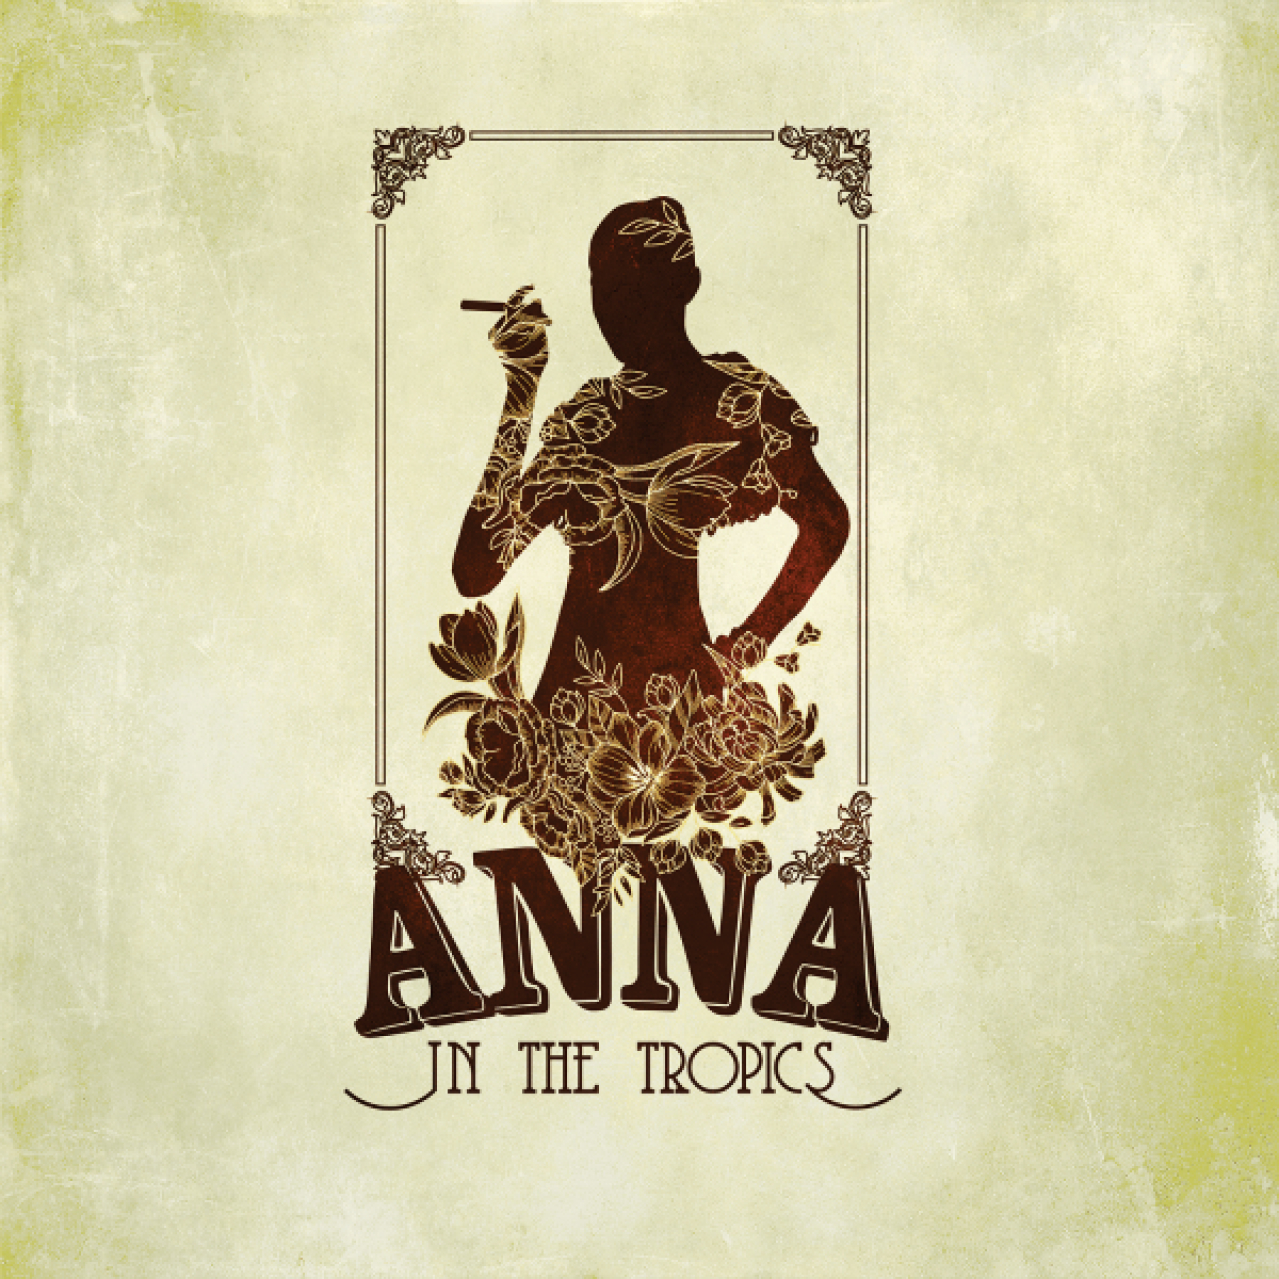 anna in the tropics logo 88075